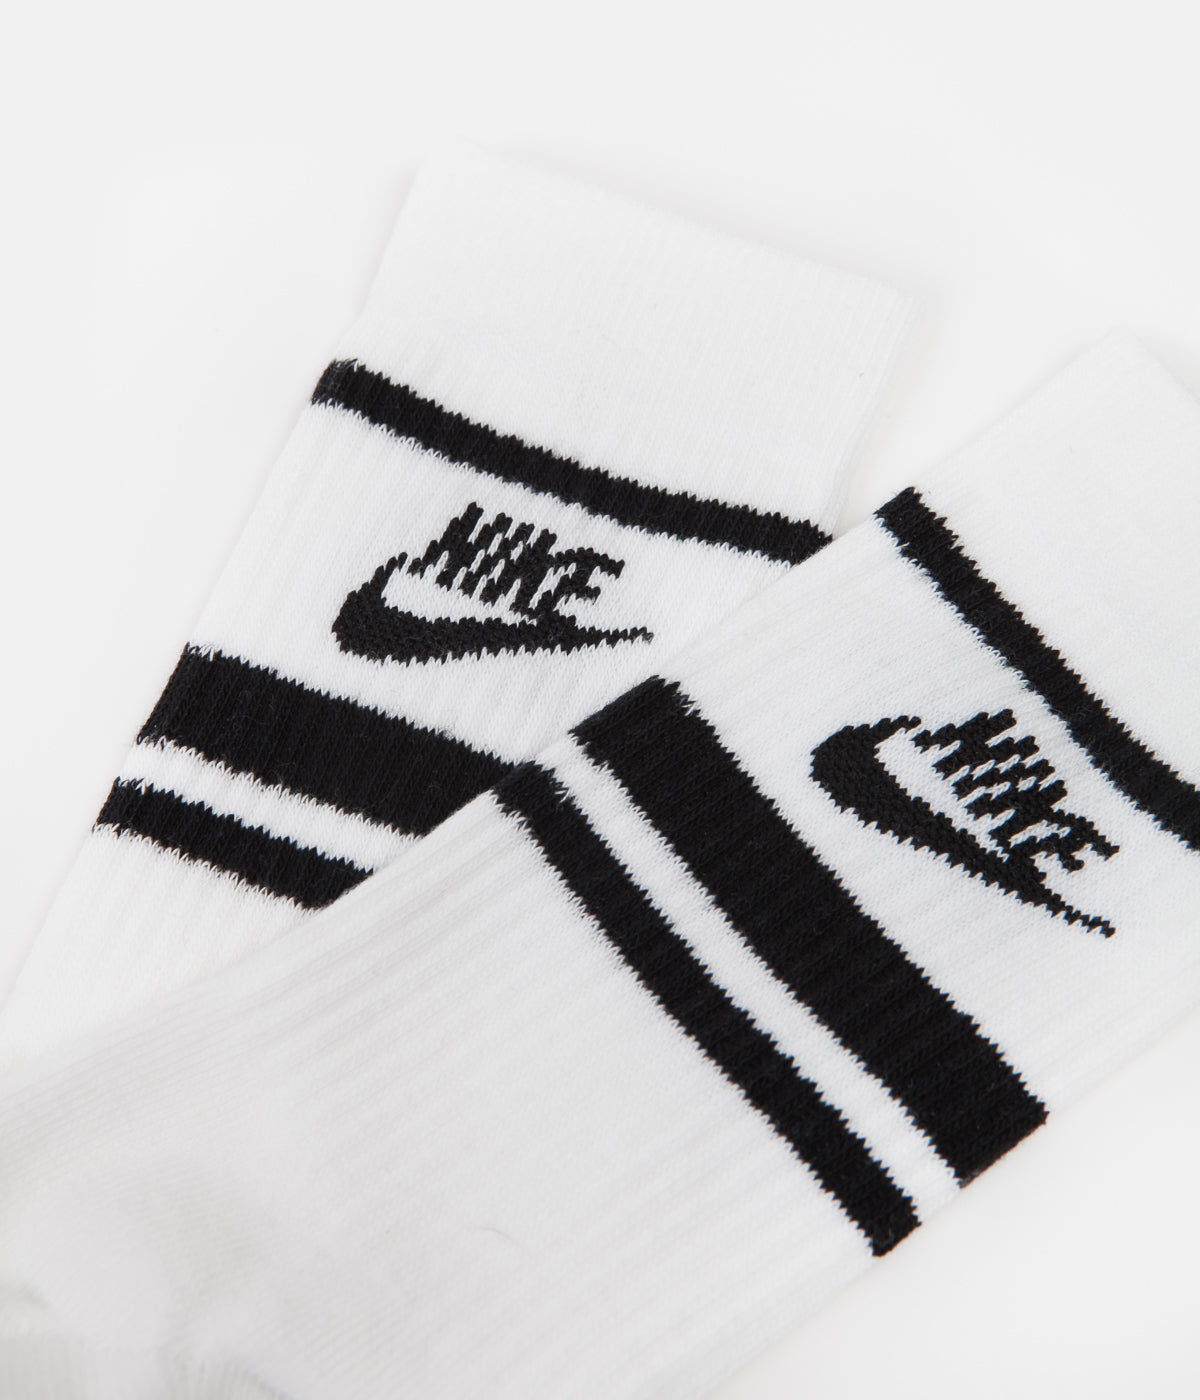 Nike Essential Stripe Crew Socks (3 Pair) - White / Black / Black ...